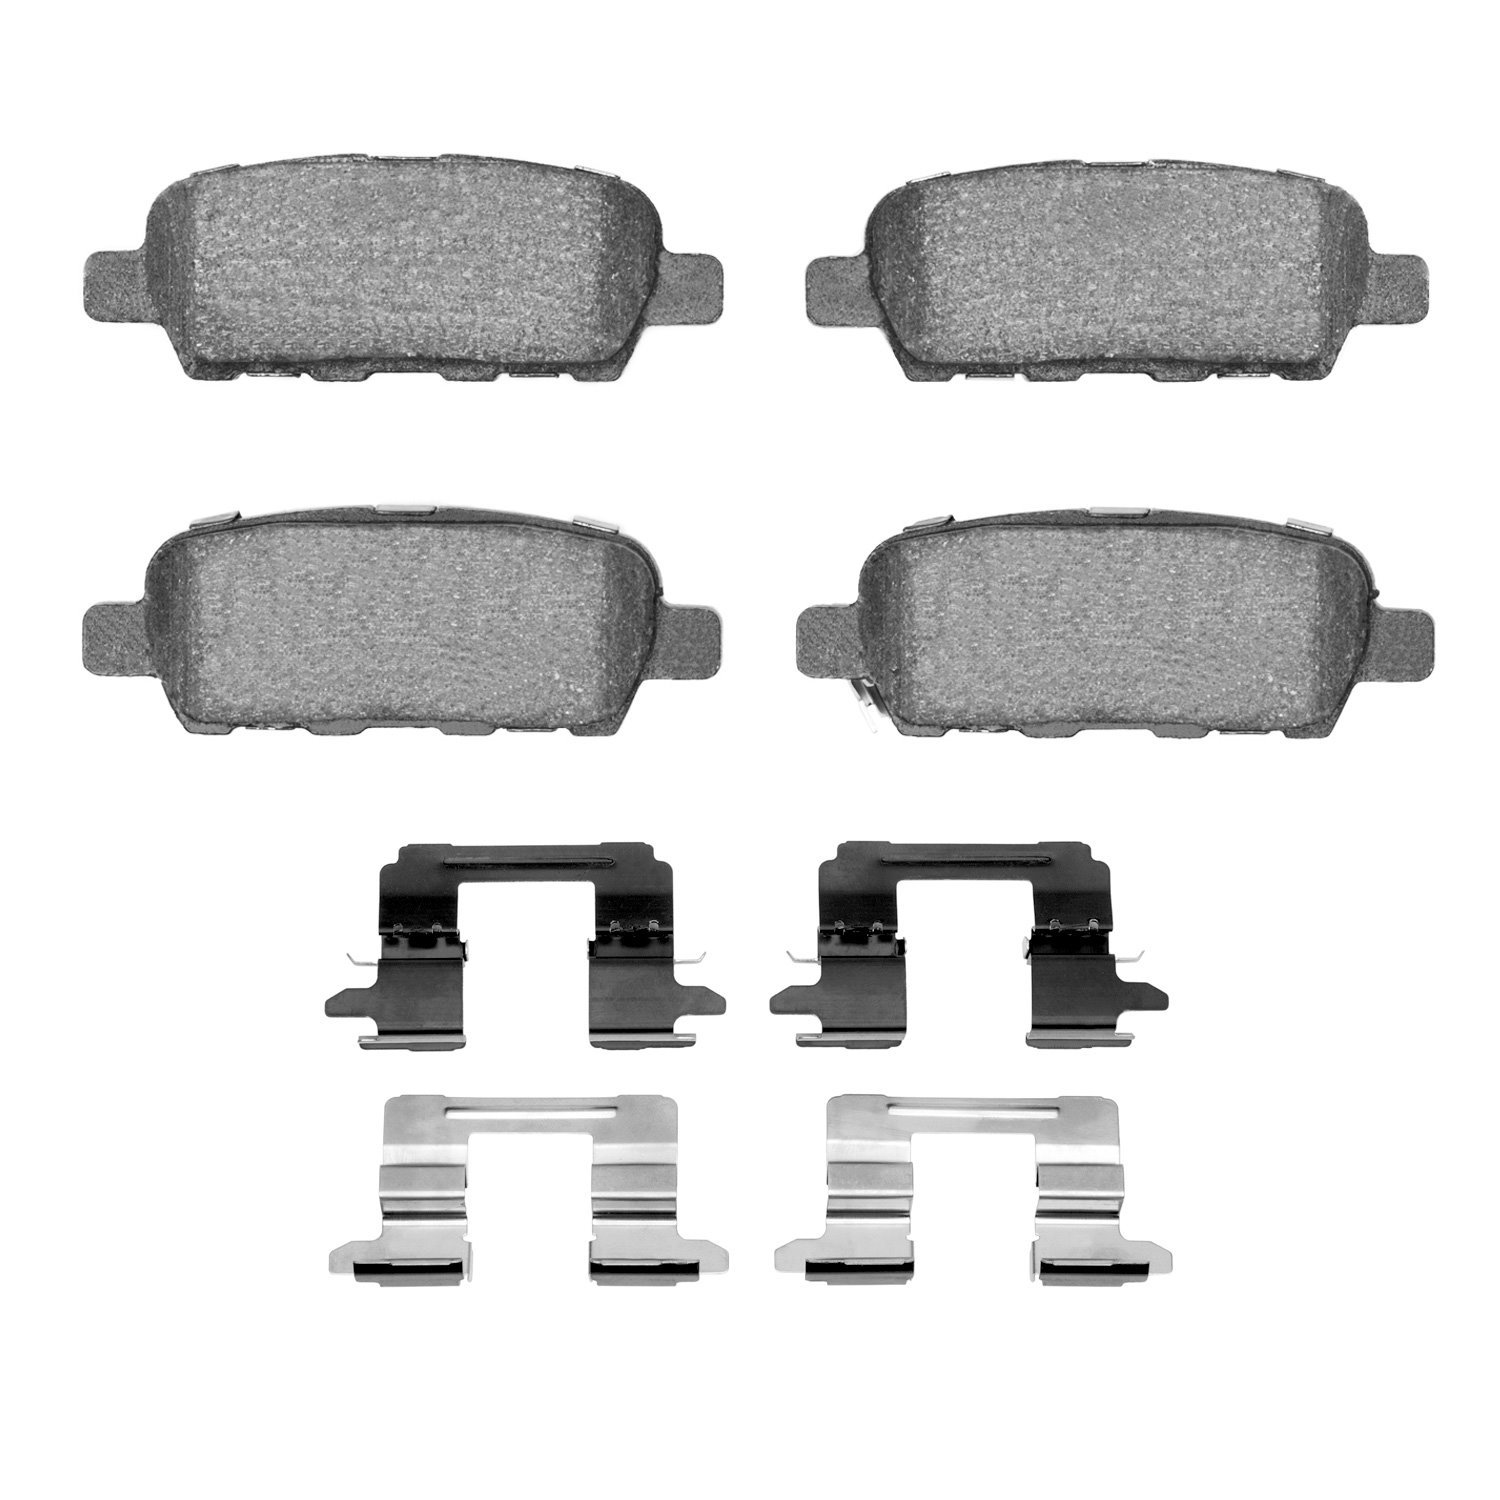 1310-0905-03 3000-Series Ceramic Brake Pads & Hardware Kit, Fits Select Multiple Makes/Models, Position: Rear